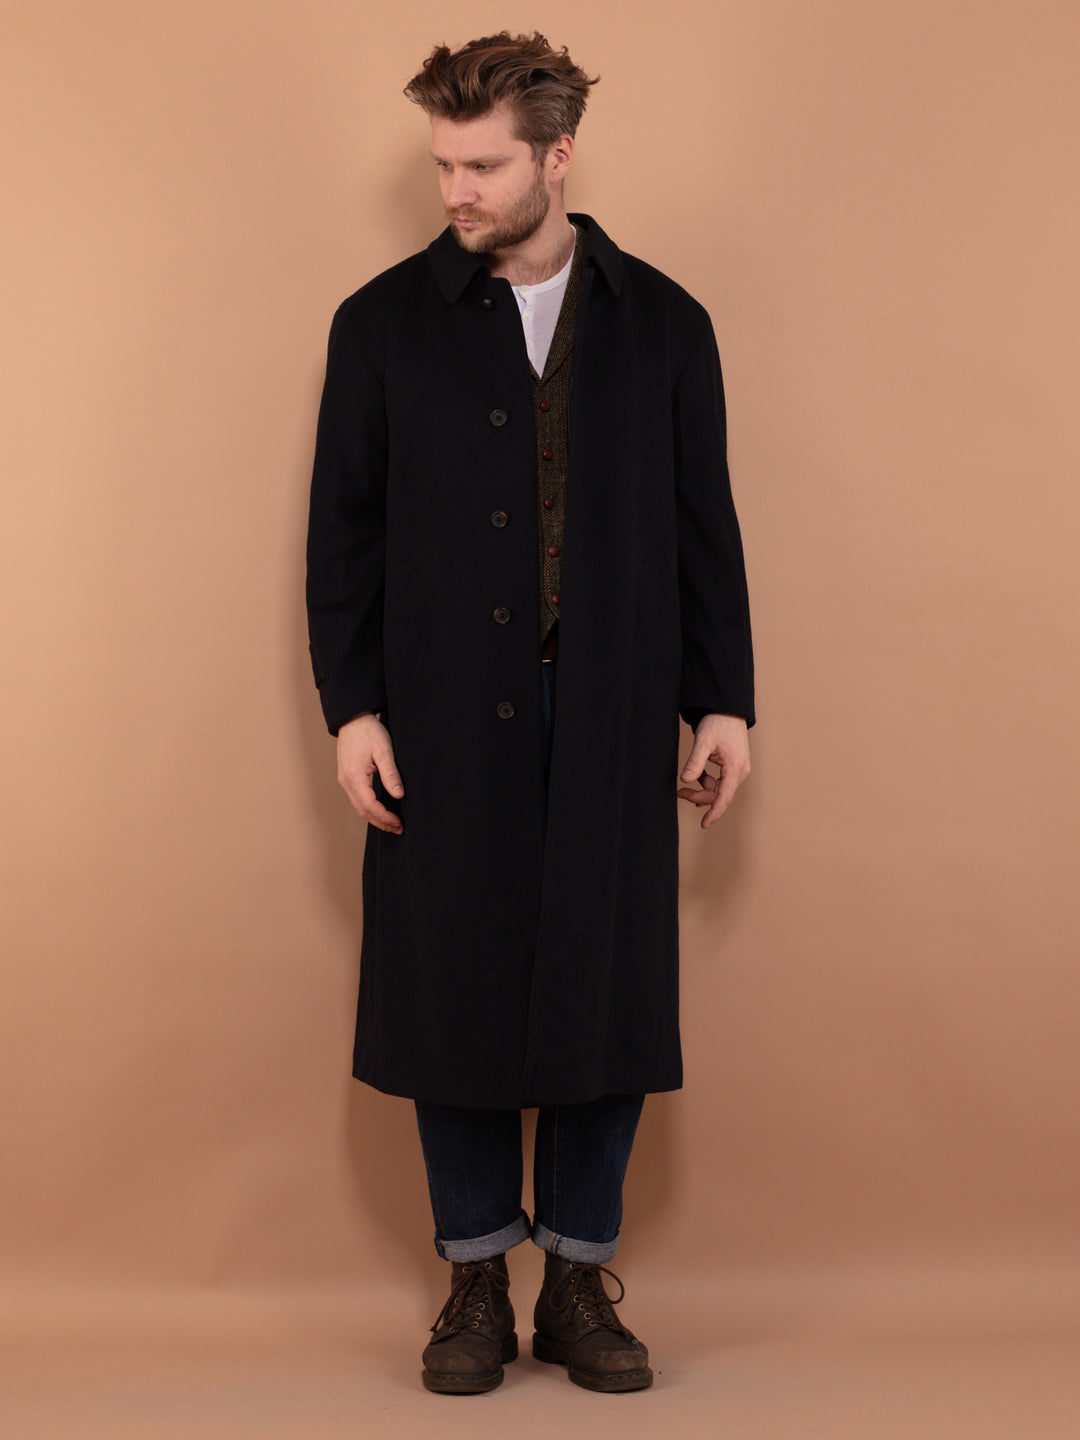 Men Wool Blend Topcoat 80's, Size M Medium, Vintage Loden Wool Coat, Classic Mens Clothing, Navy Blue Spring Coat, Elegant Outerwear